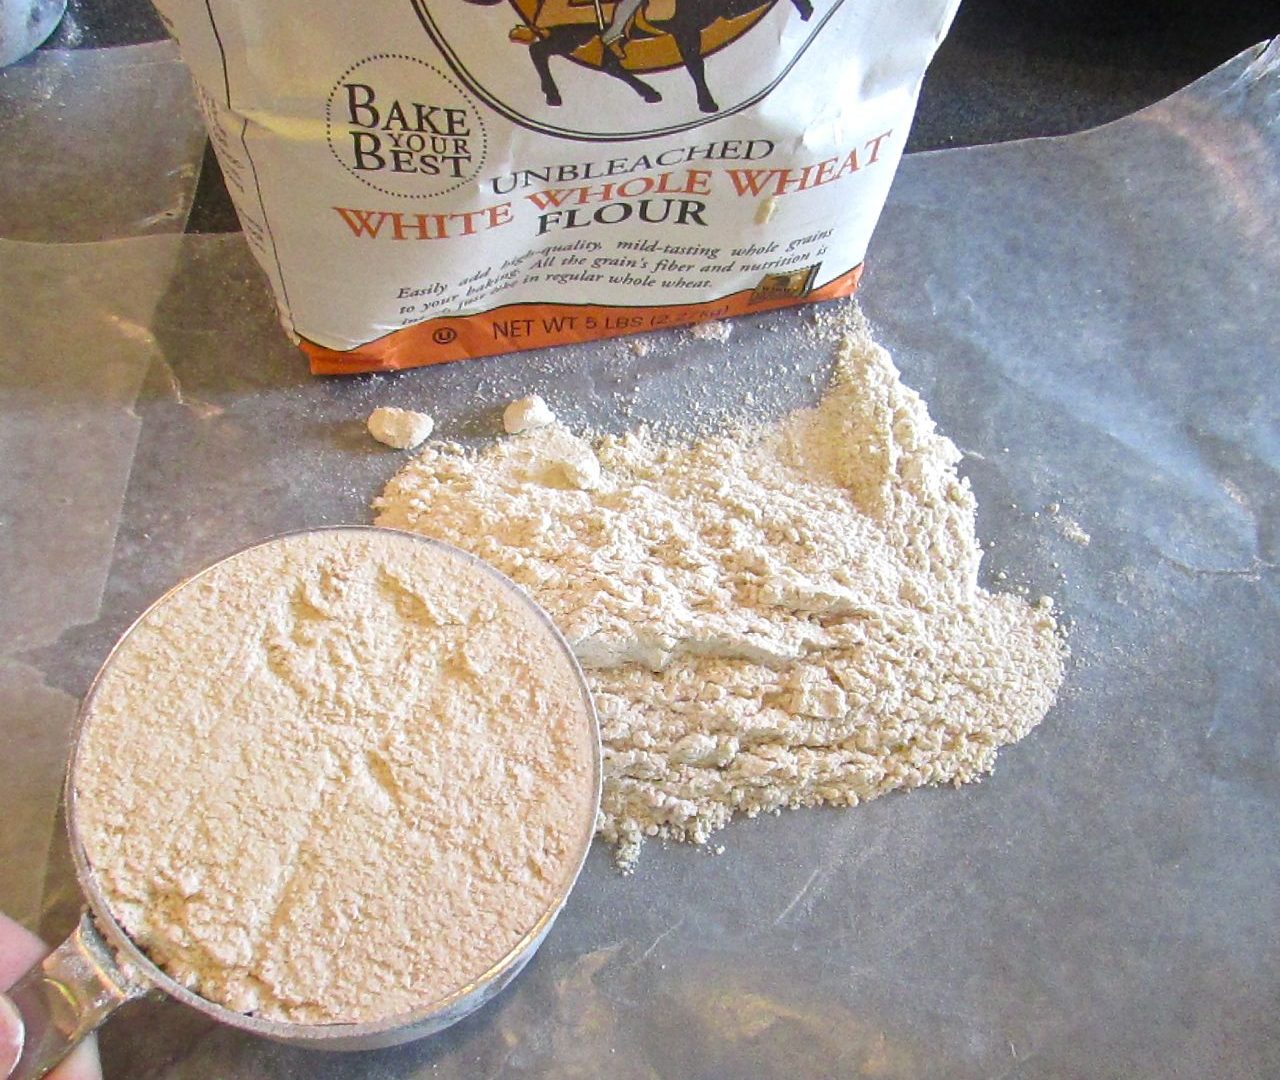 The Healthy, Nutritious White Flour?